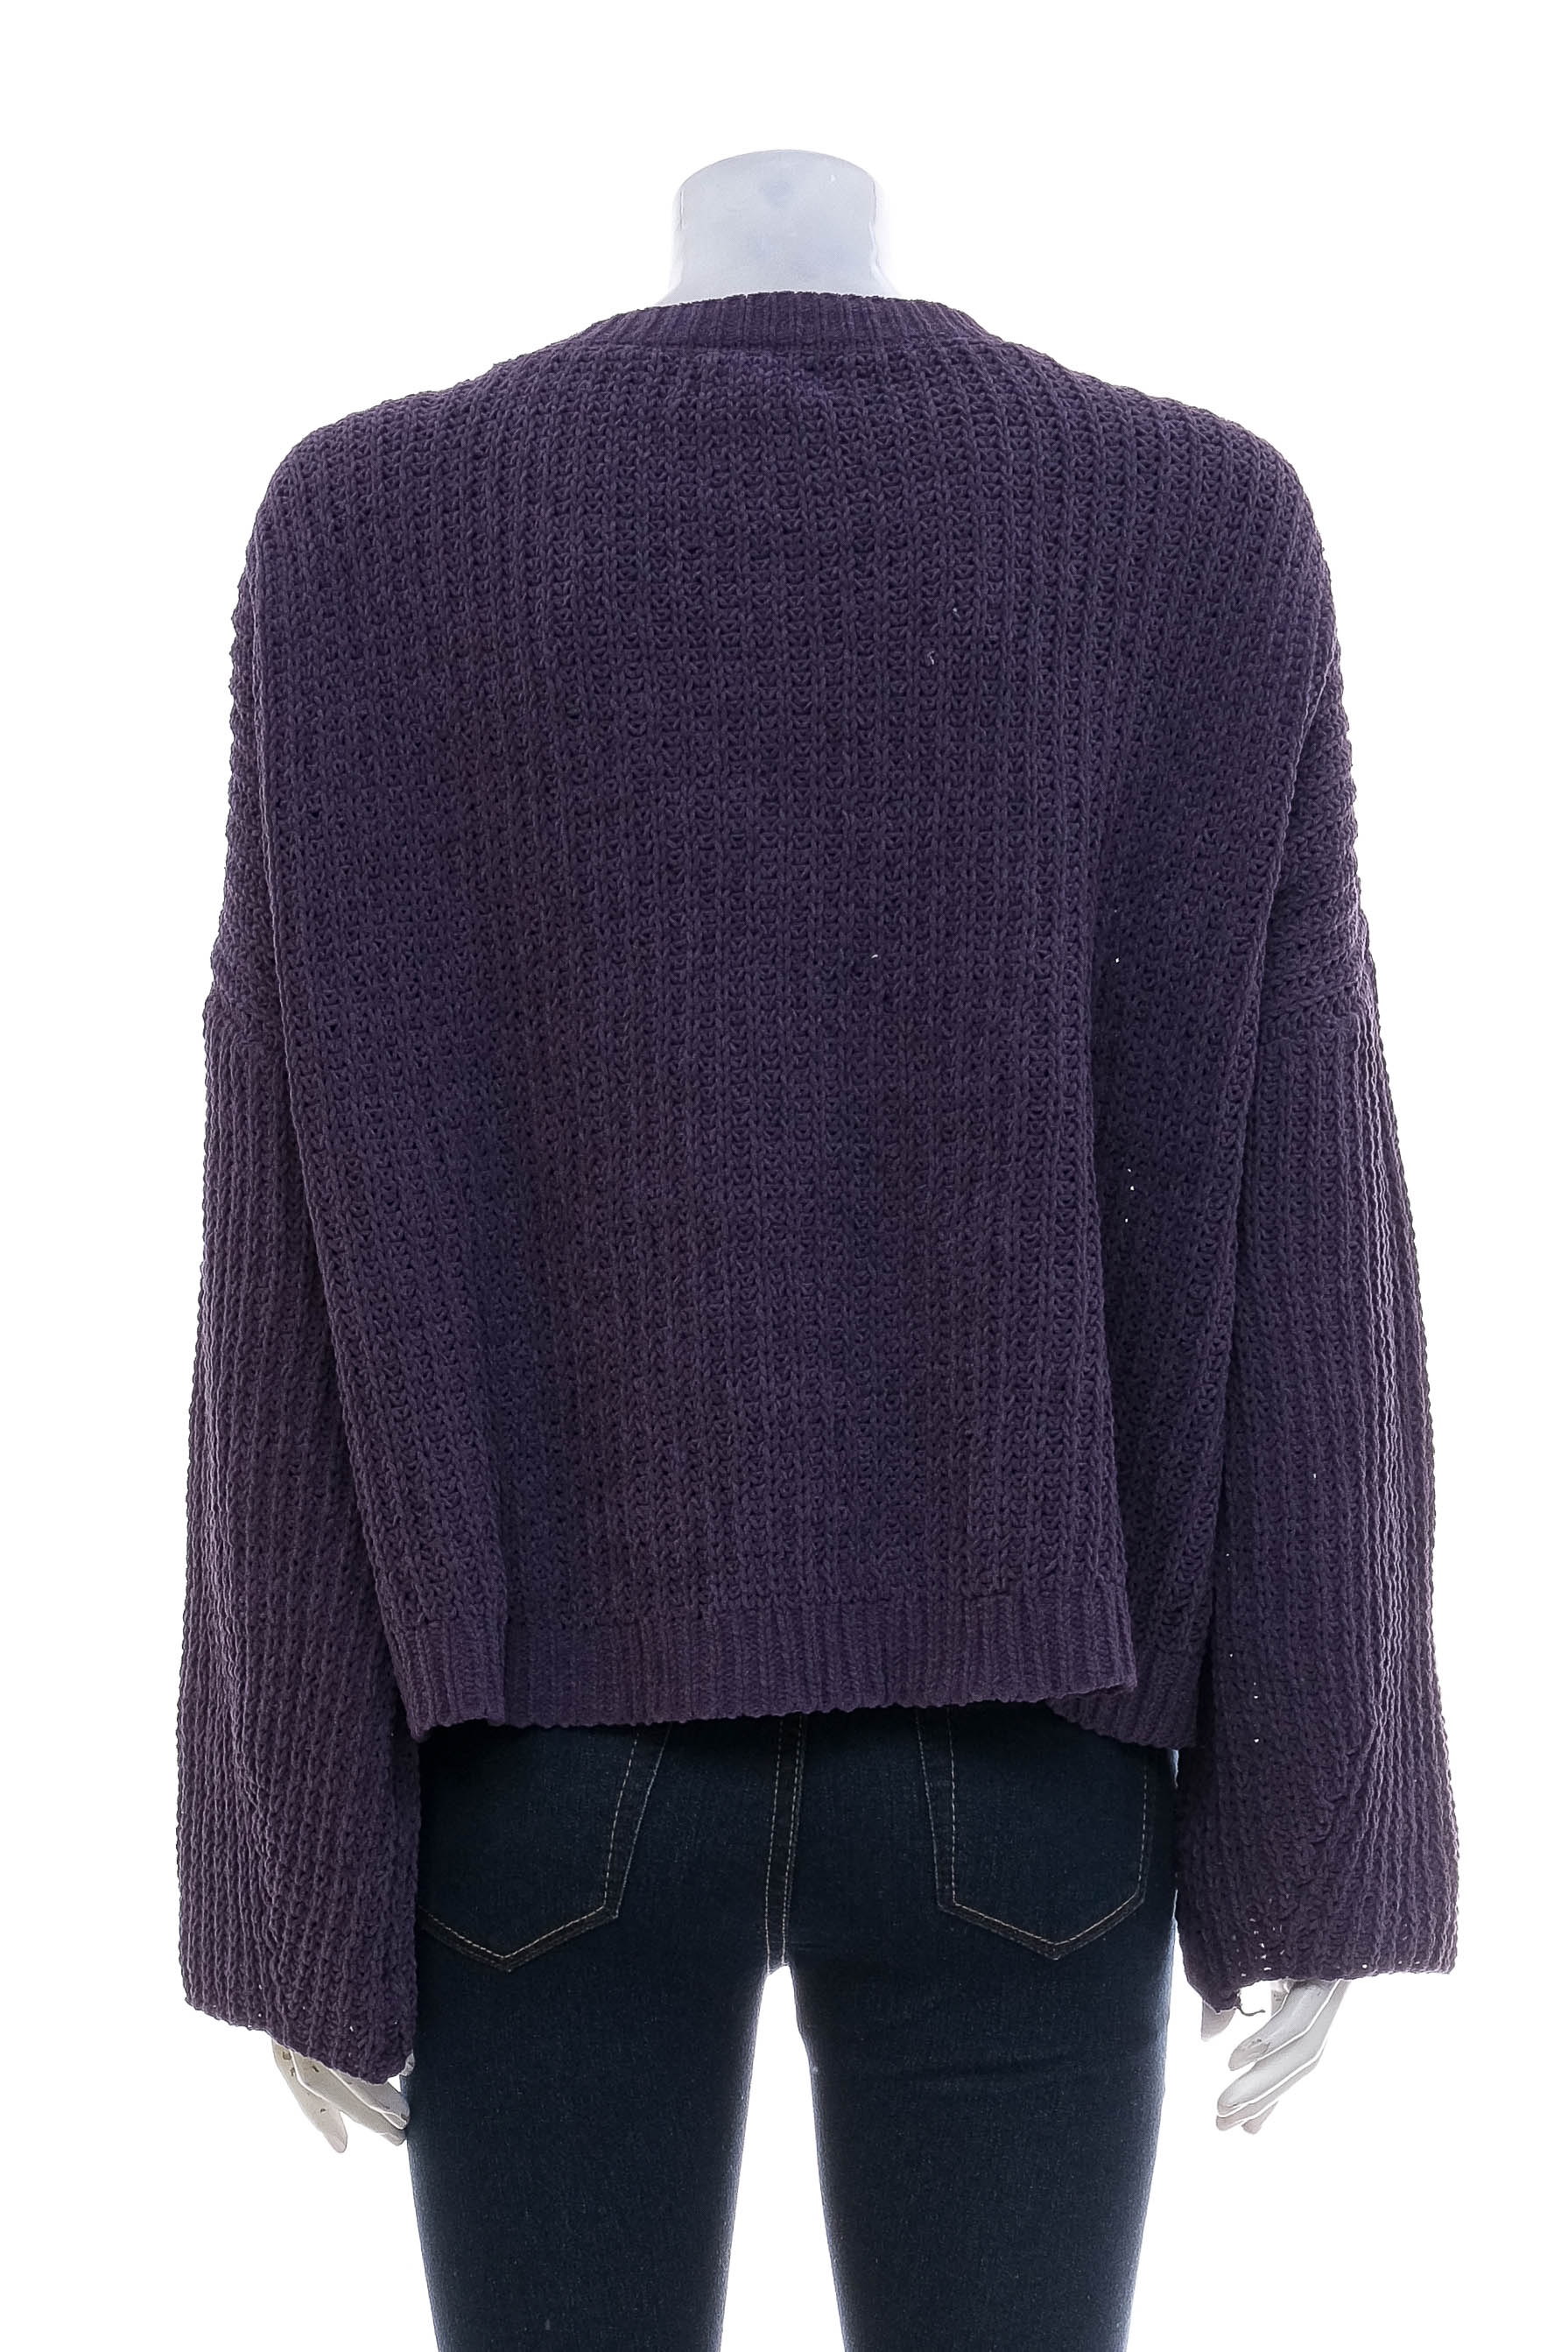 Women's sweater - Universal Thread - 1